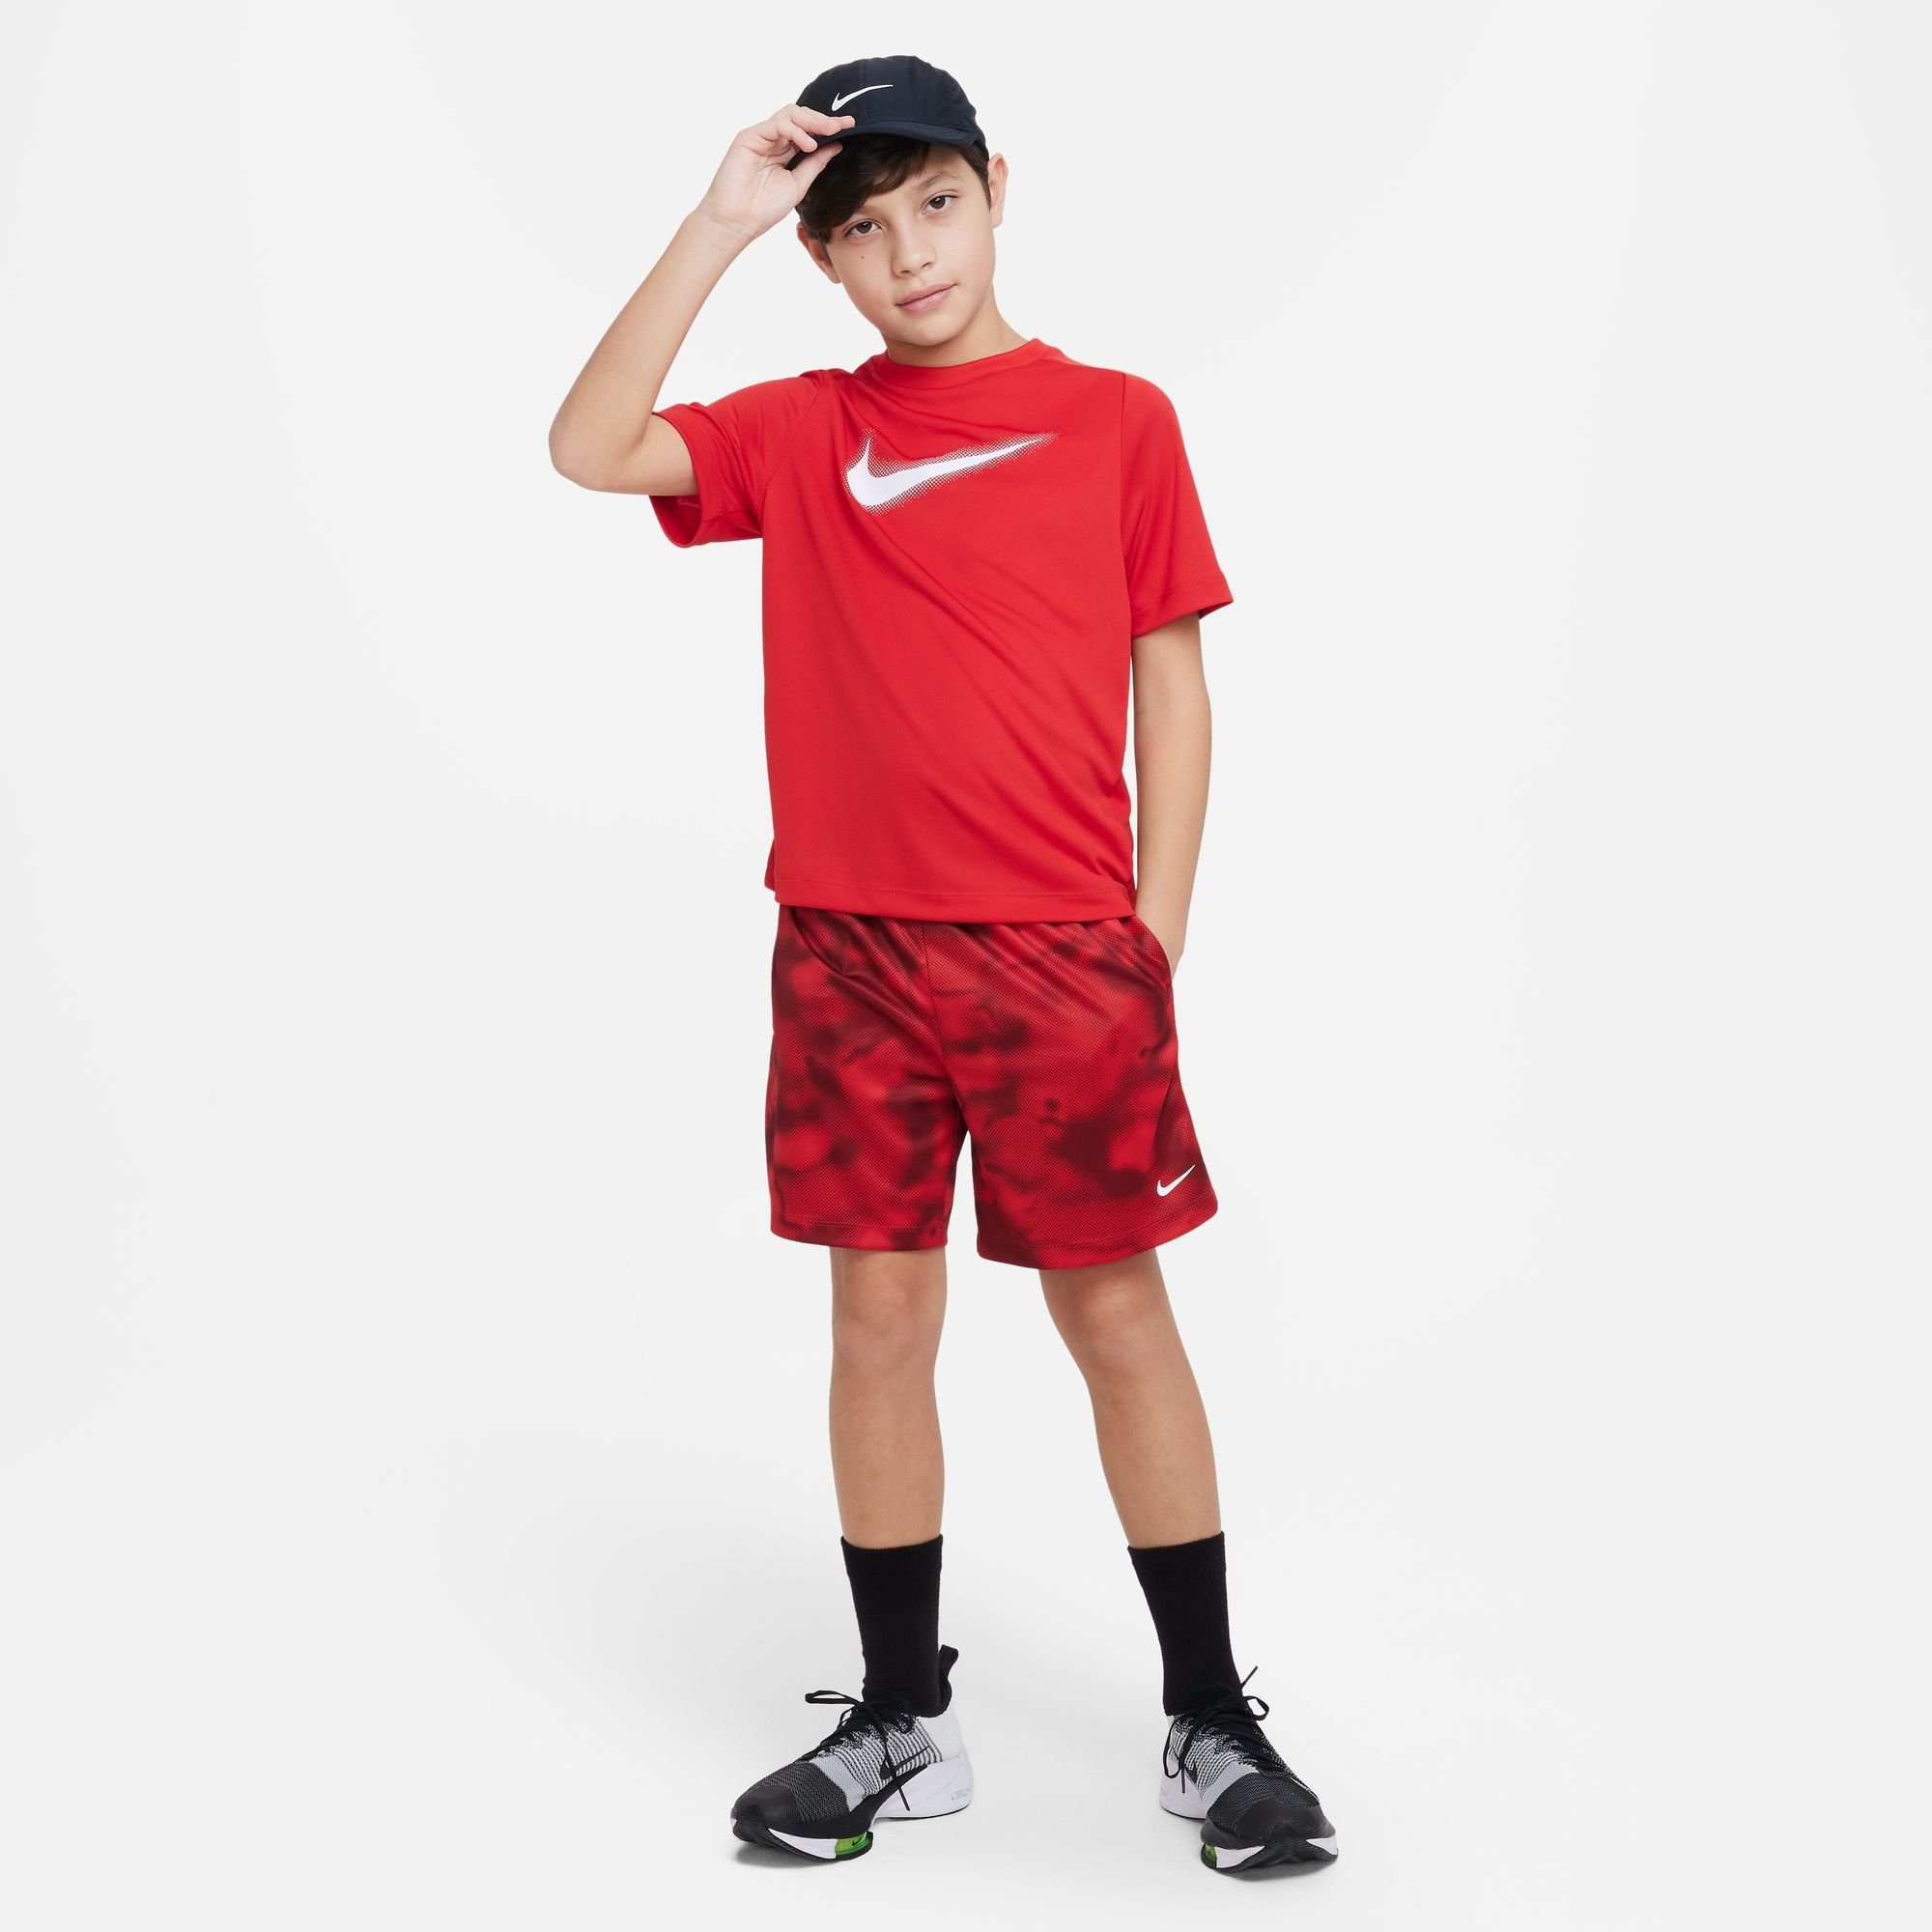 TRAINING BIG Nike TOP MULTI+ KIDS' Trainingsshirt rot DRI-FIT (BOYS) GRAPHIC